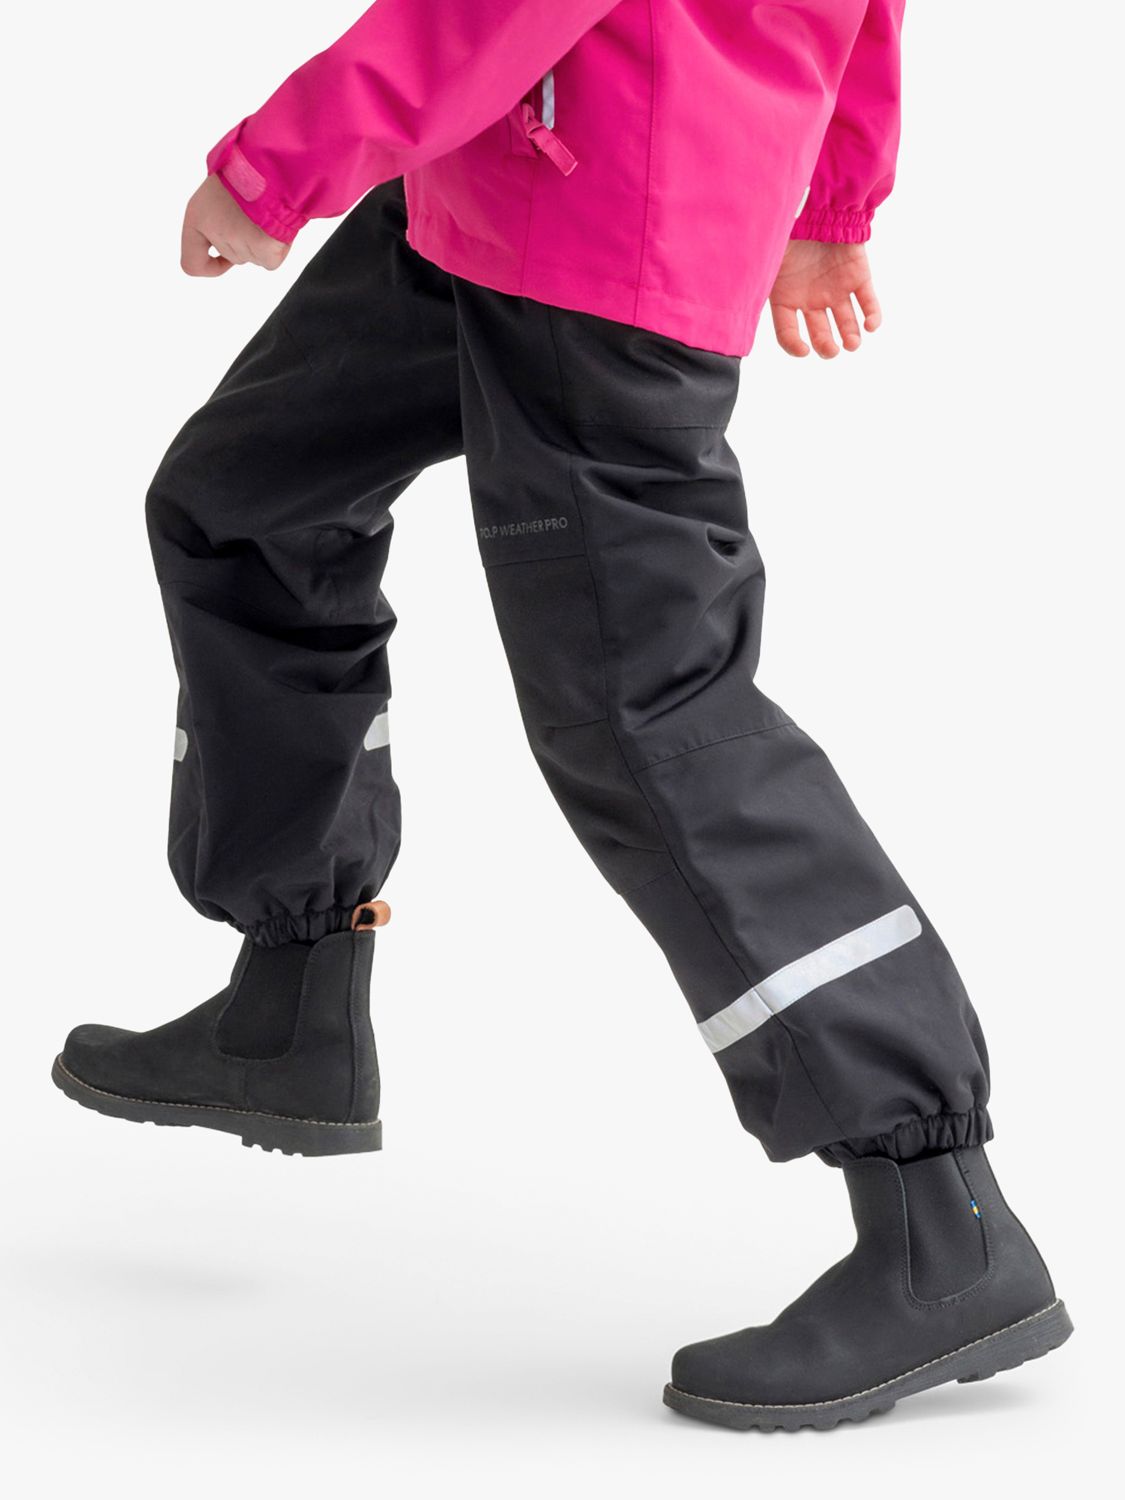 Polarn O. Pyret Kids' Waterproof Shell Trousers, Black, 2-3 years